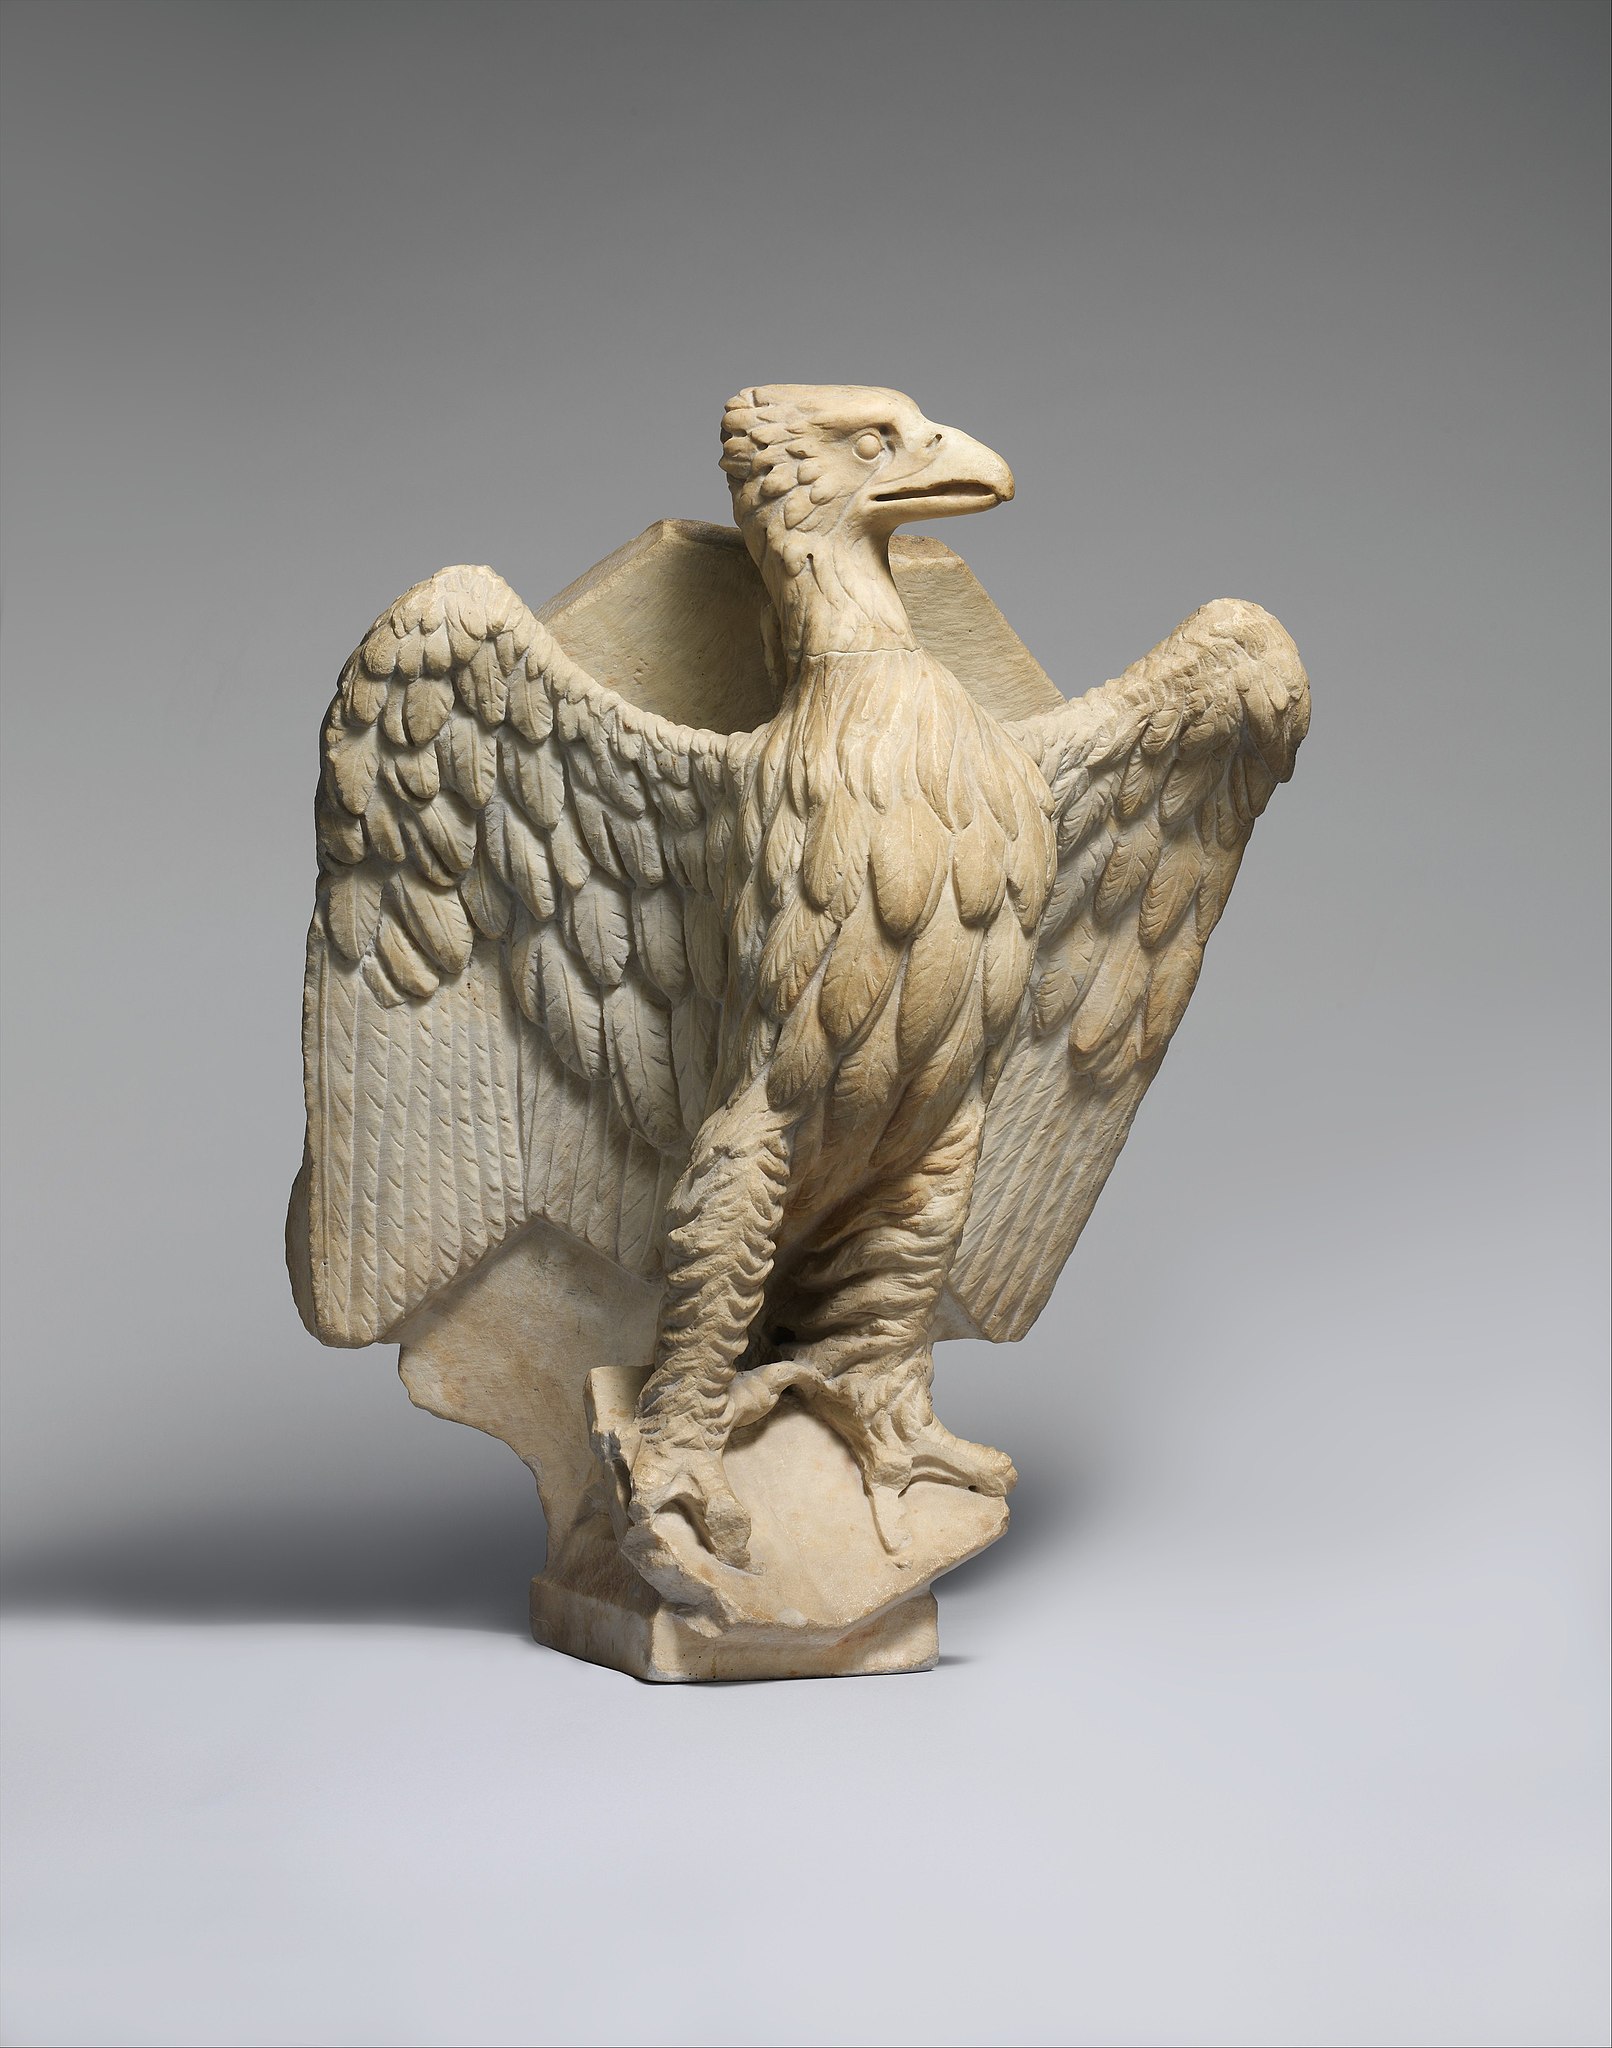 Giovanni Pisano, lectern with eagle (1301; marble, 70.5 x 61.5 x 40.6 cm; New York, Metropolitan Museum)